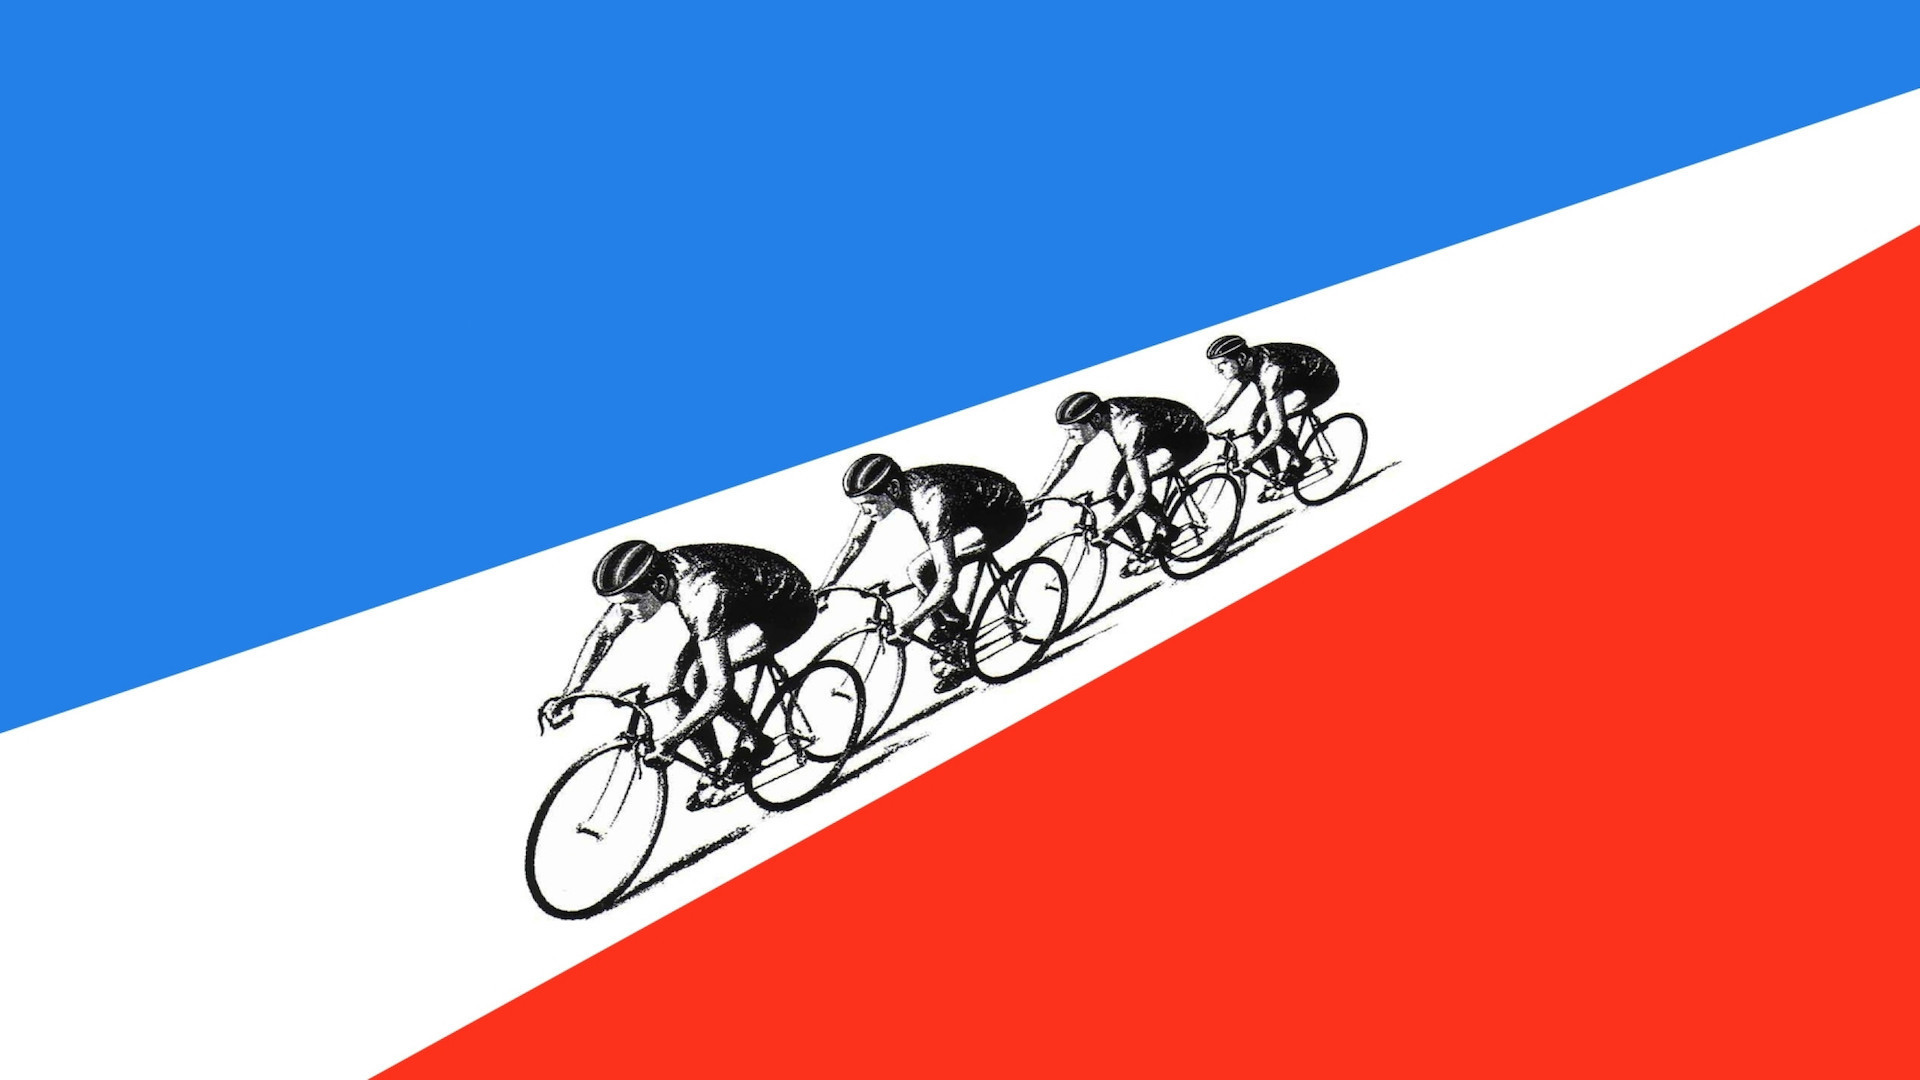 Descarga gratuita de fondo de pantalla para móvil de Ciclismo, Deporte.